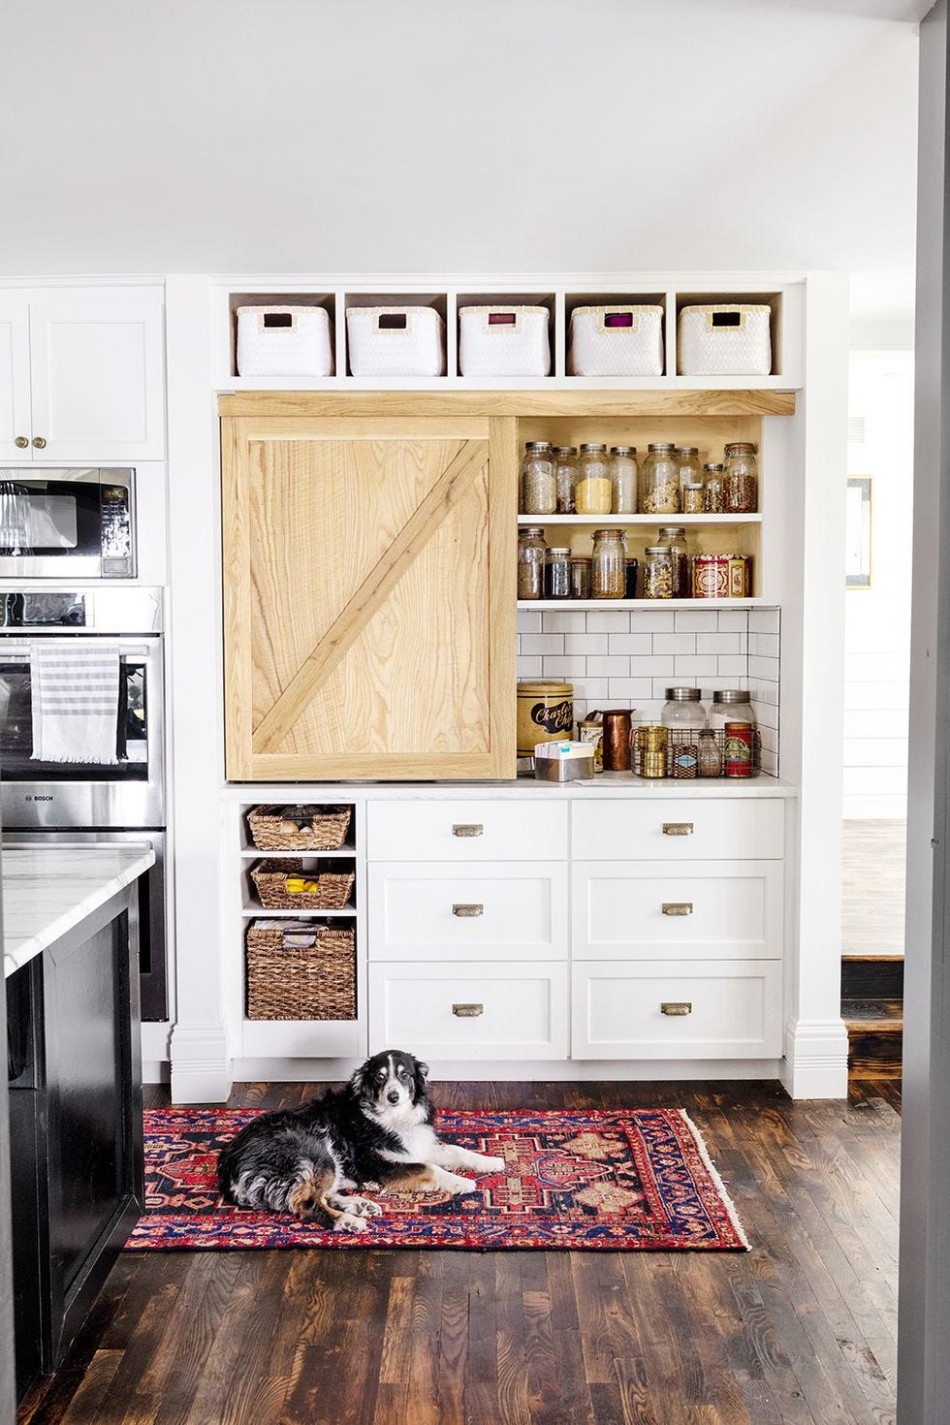 6 Best Small Kitchen Design Ideas - Tiny Kitchen Decorating